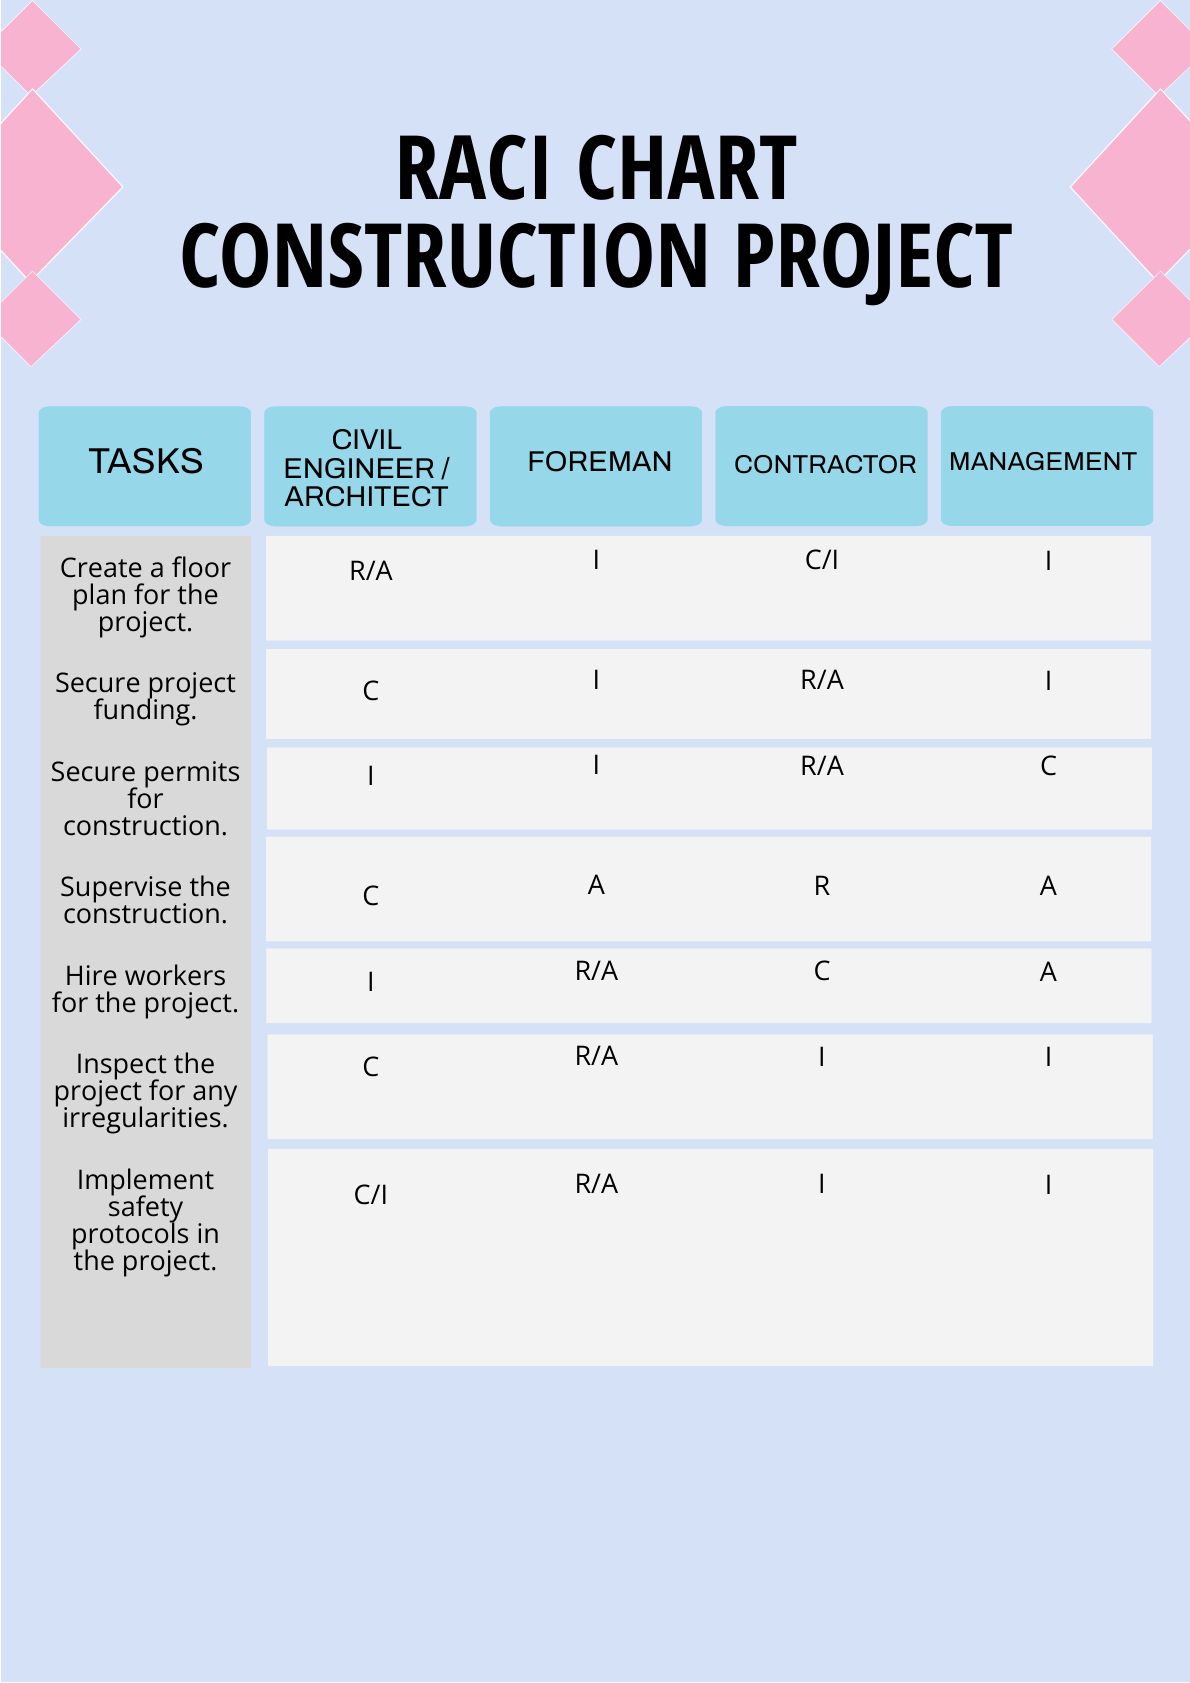 RACI Chart Construction Project